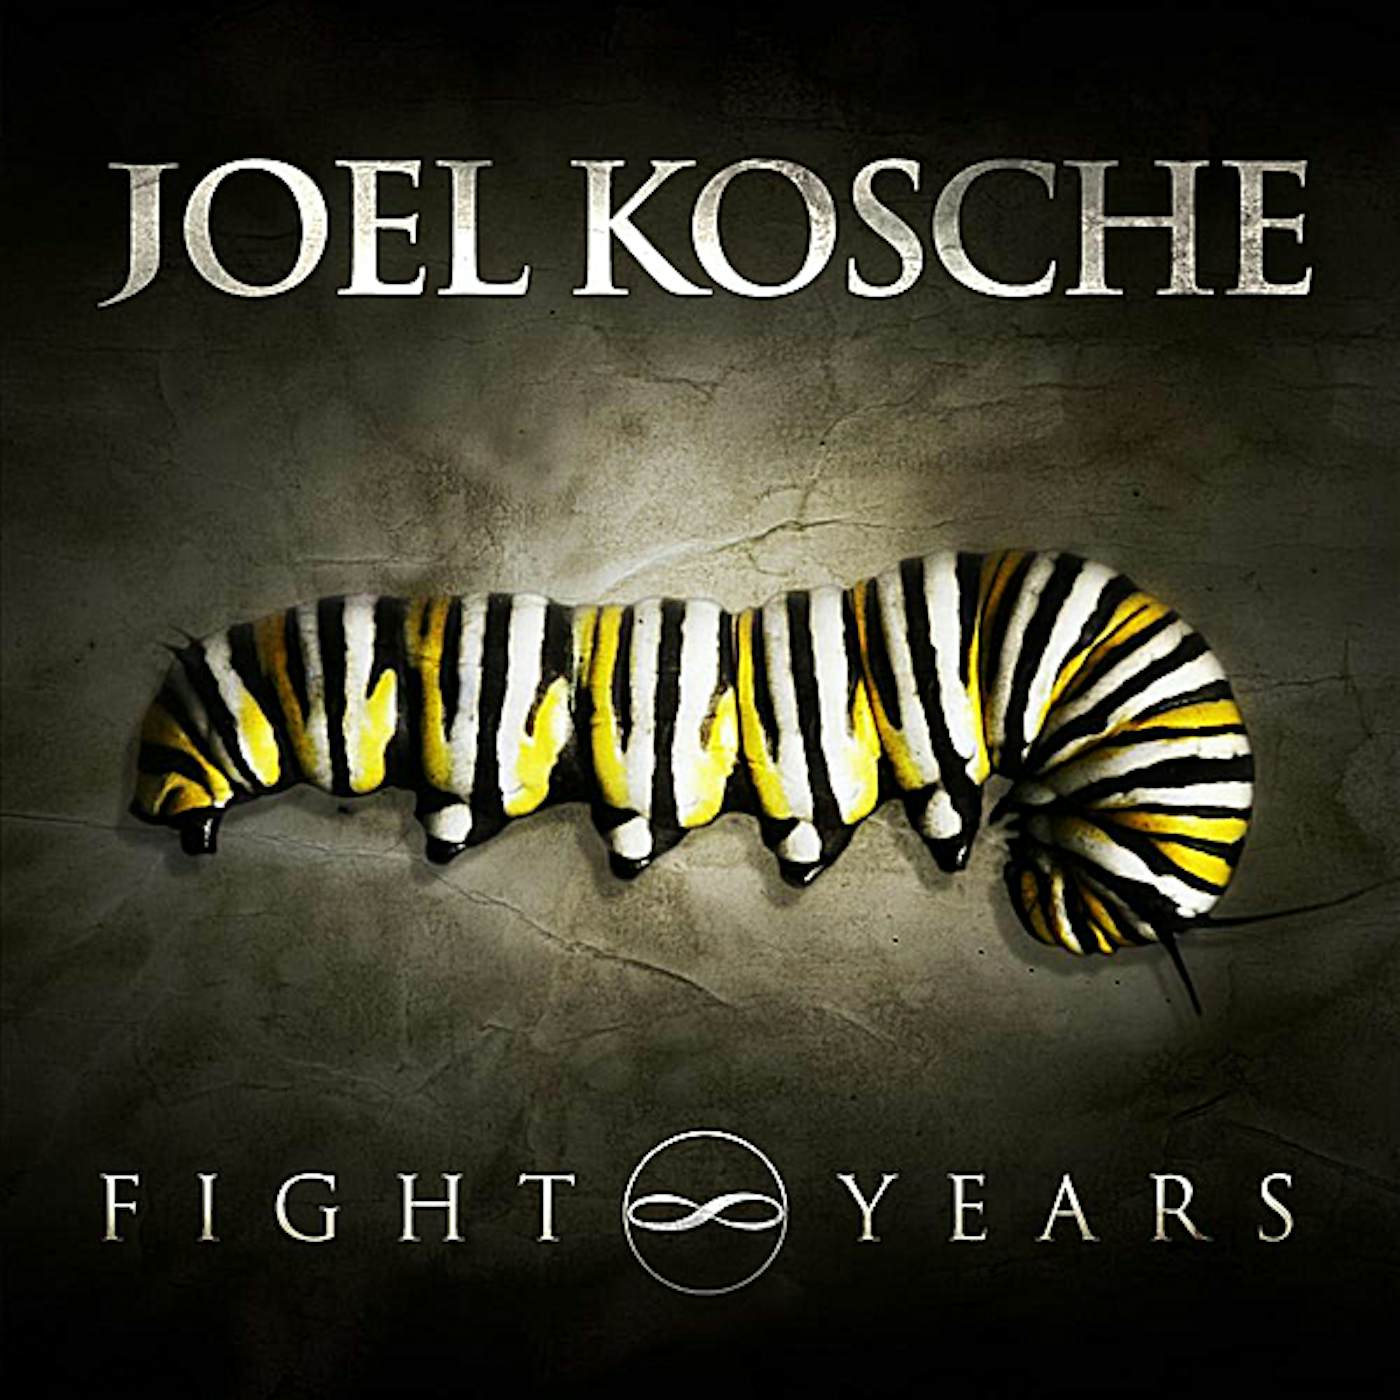 Joel Kosche FIGHT YEARS CD